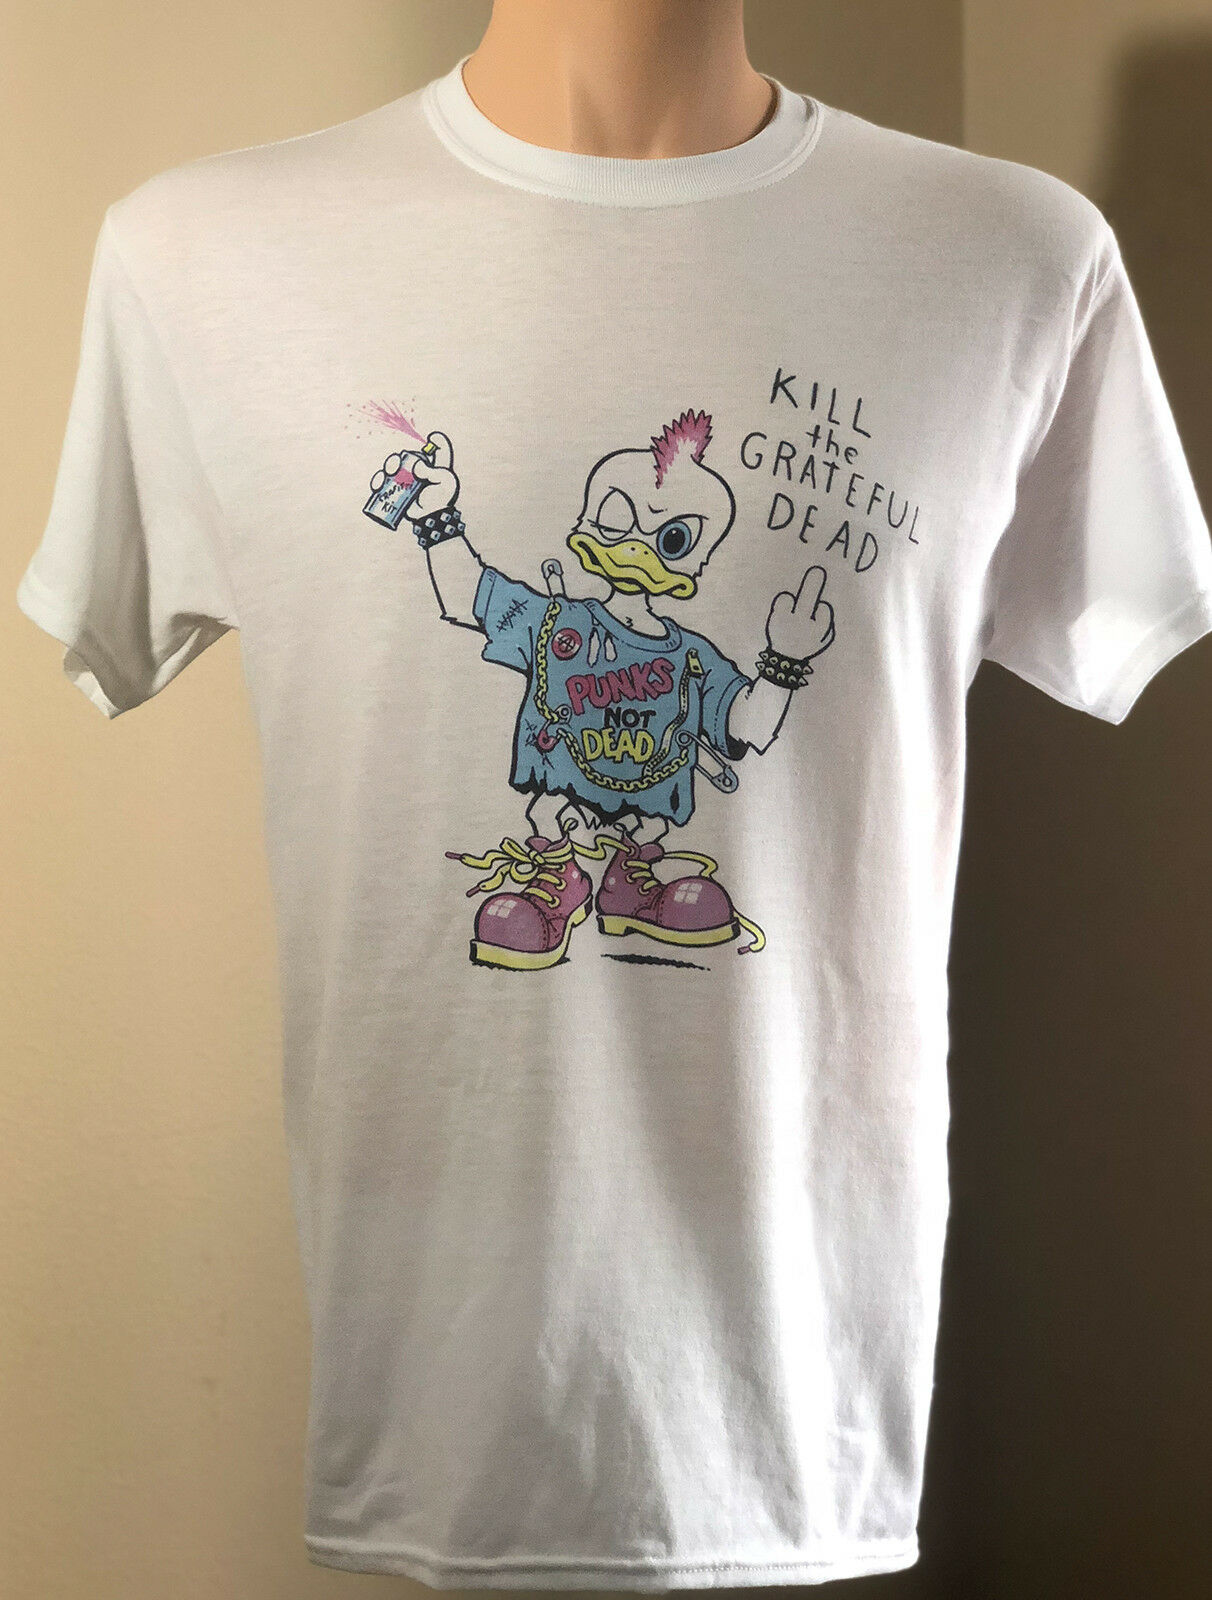 Kill The Grateful Dead T-Shirt nirvana//as worn by//kurt cobain